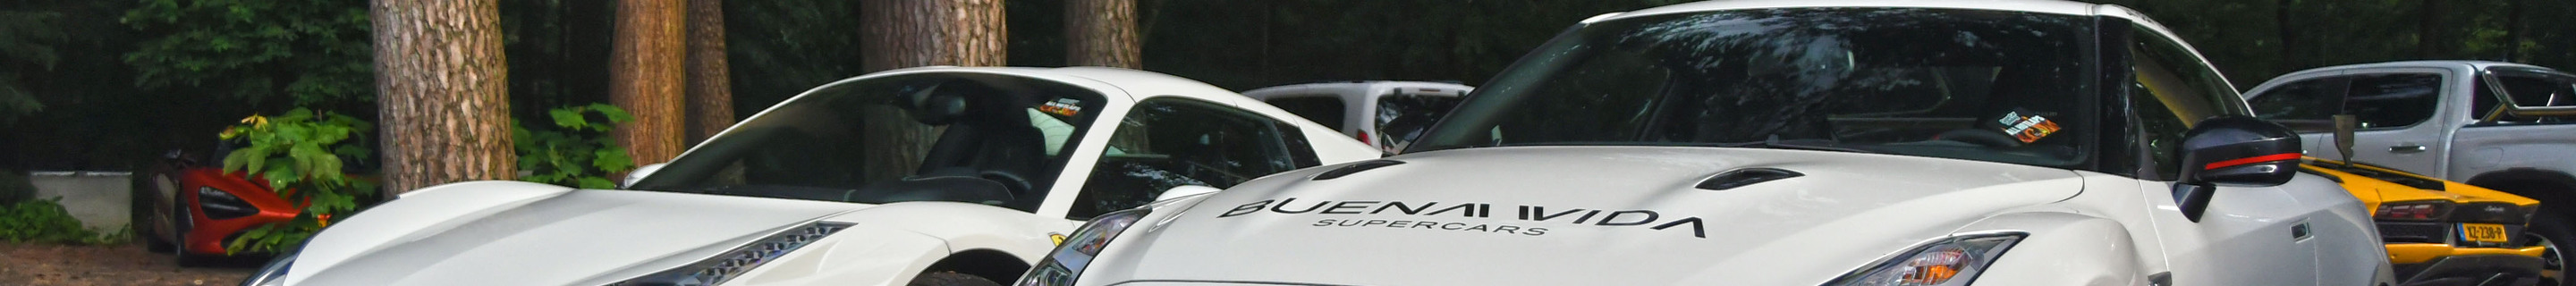 Nissan GT-R 2011 Nismo